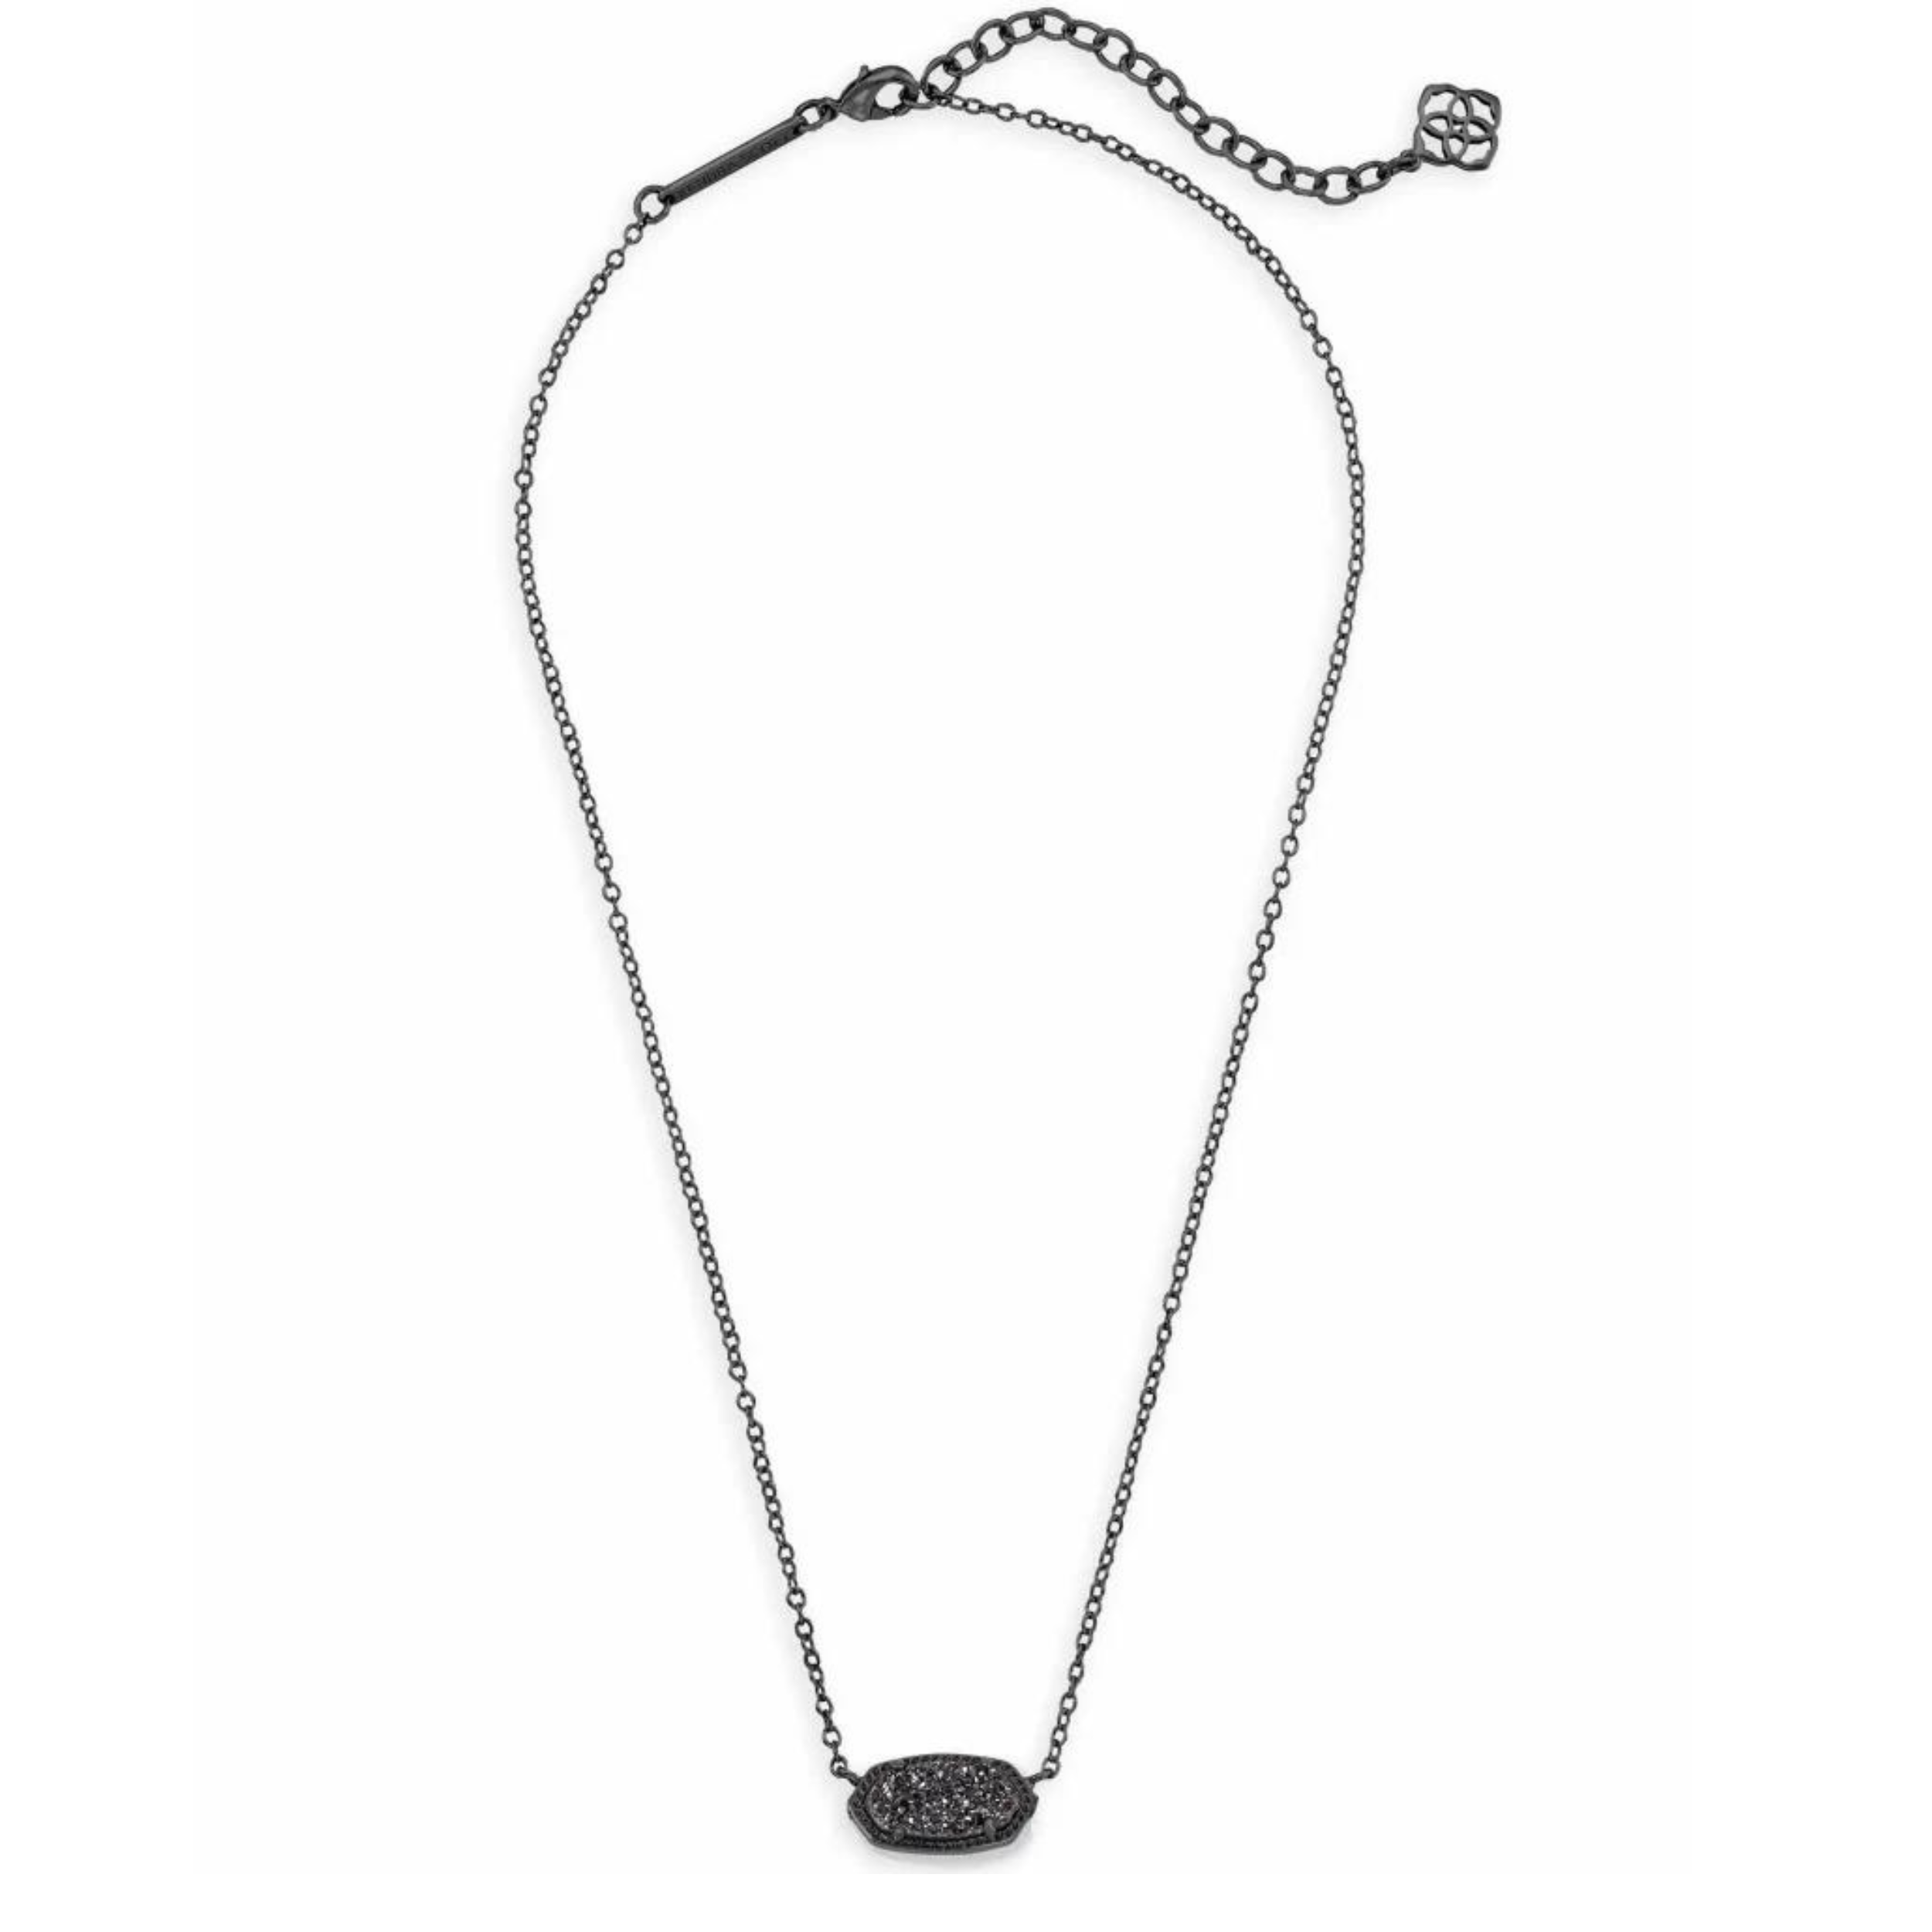 Kendra Scott | Elisa Gunmetal Pendant Necklace in Black Drusy - Giddy Up Glamour Boutique